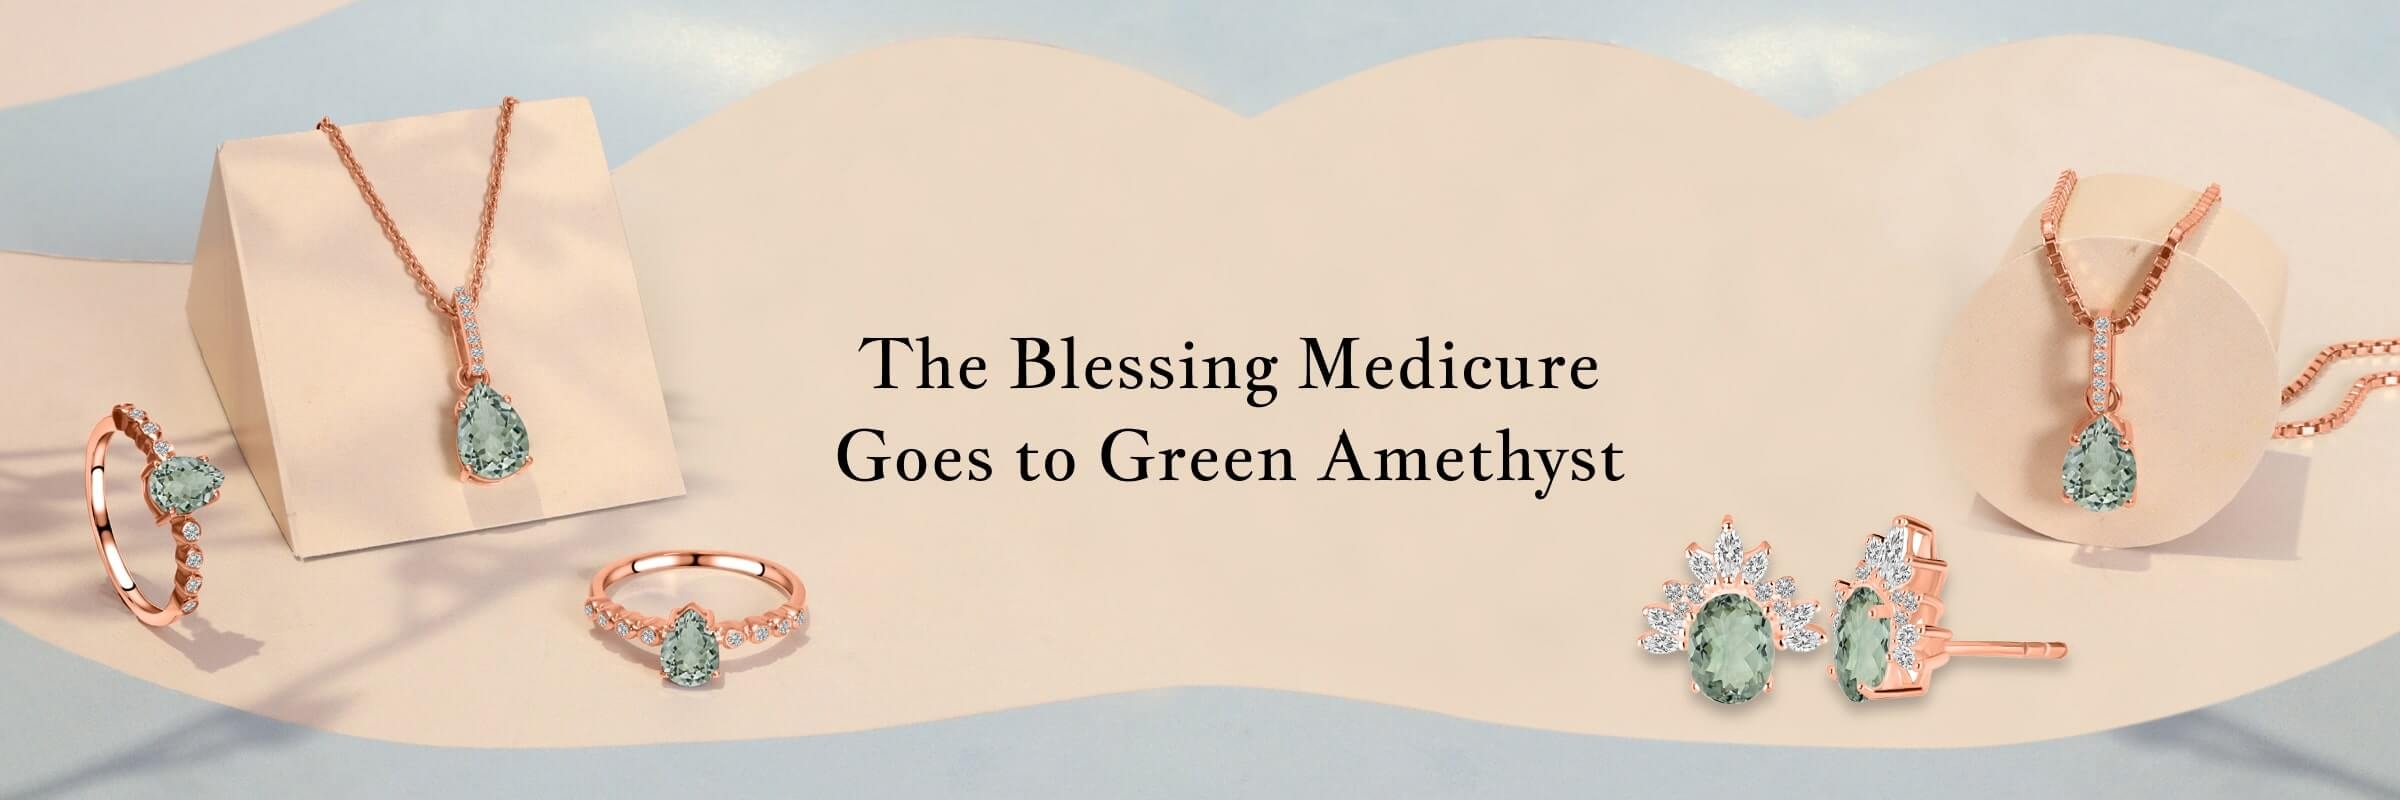 Green Amethyst Healing Properties And Benefits